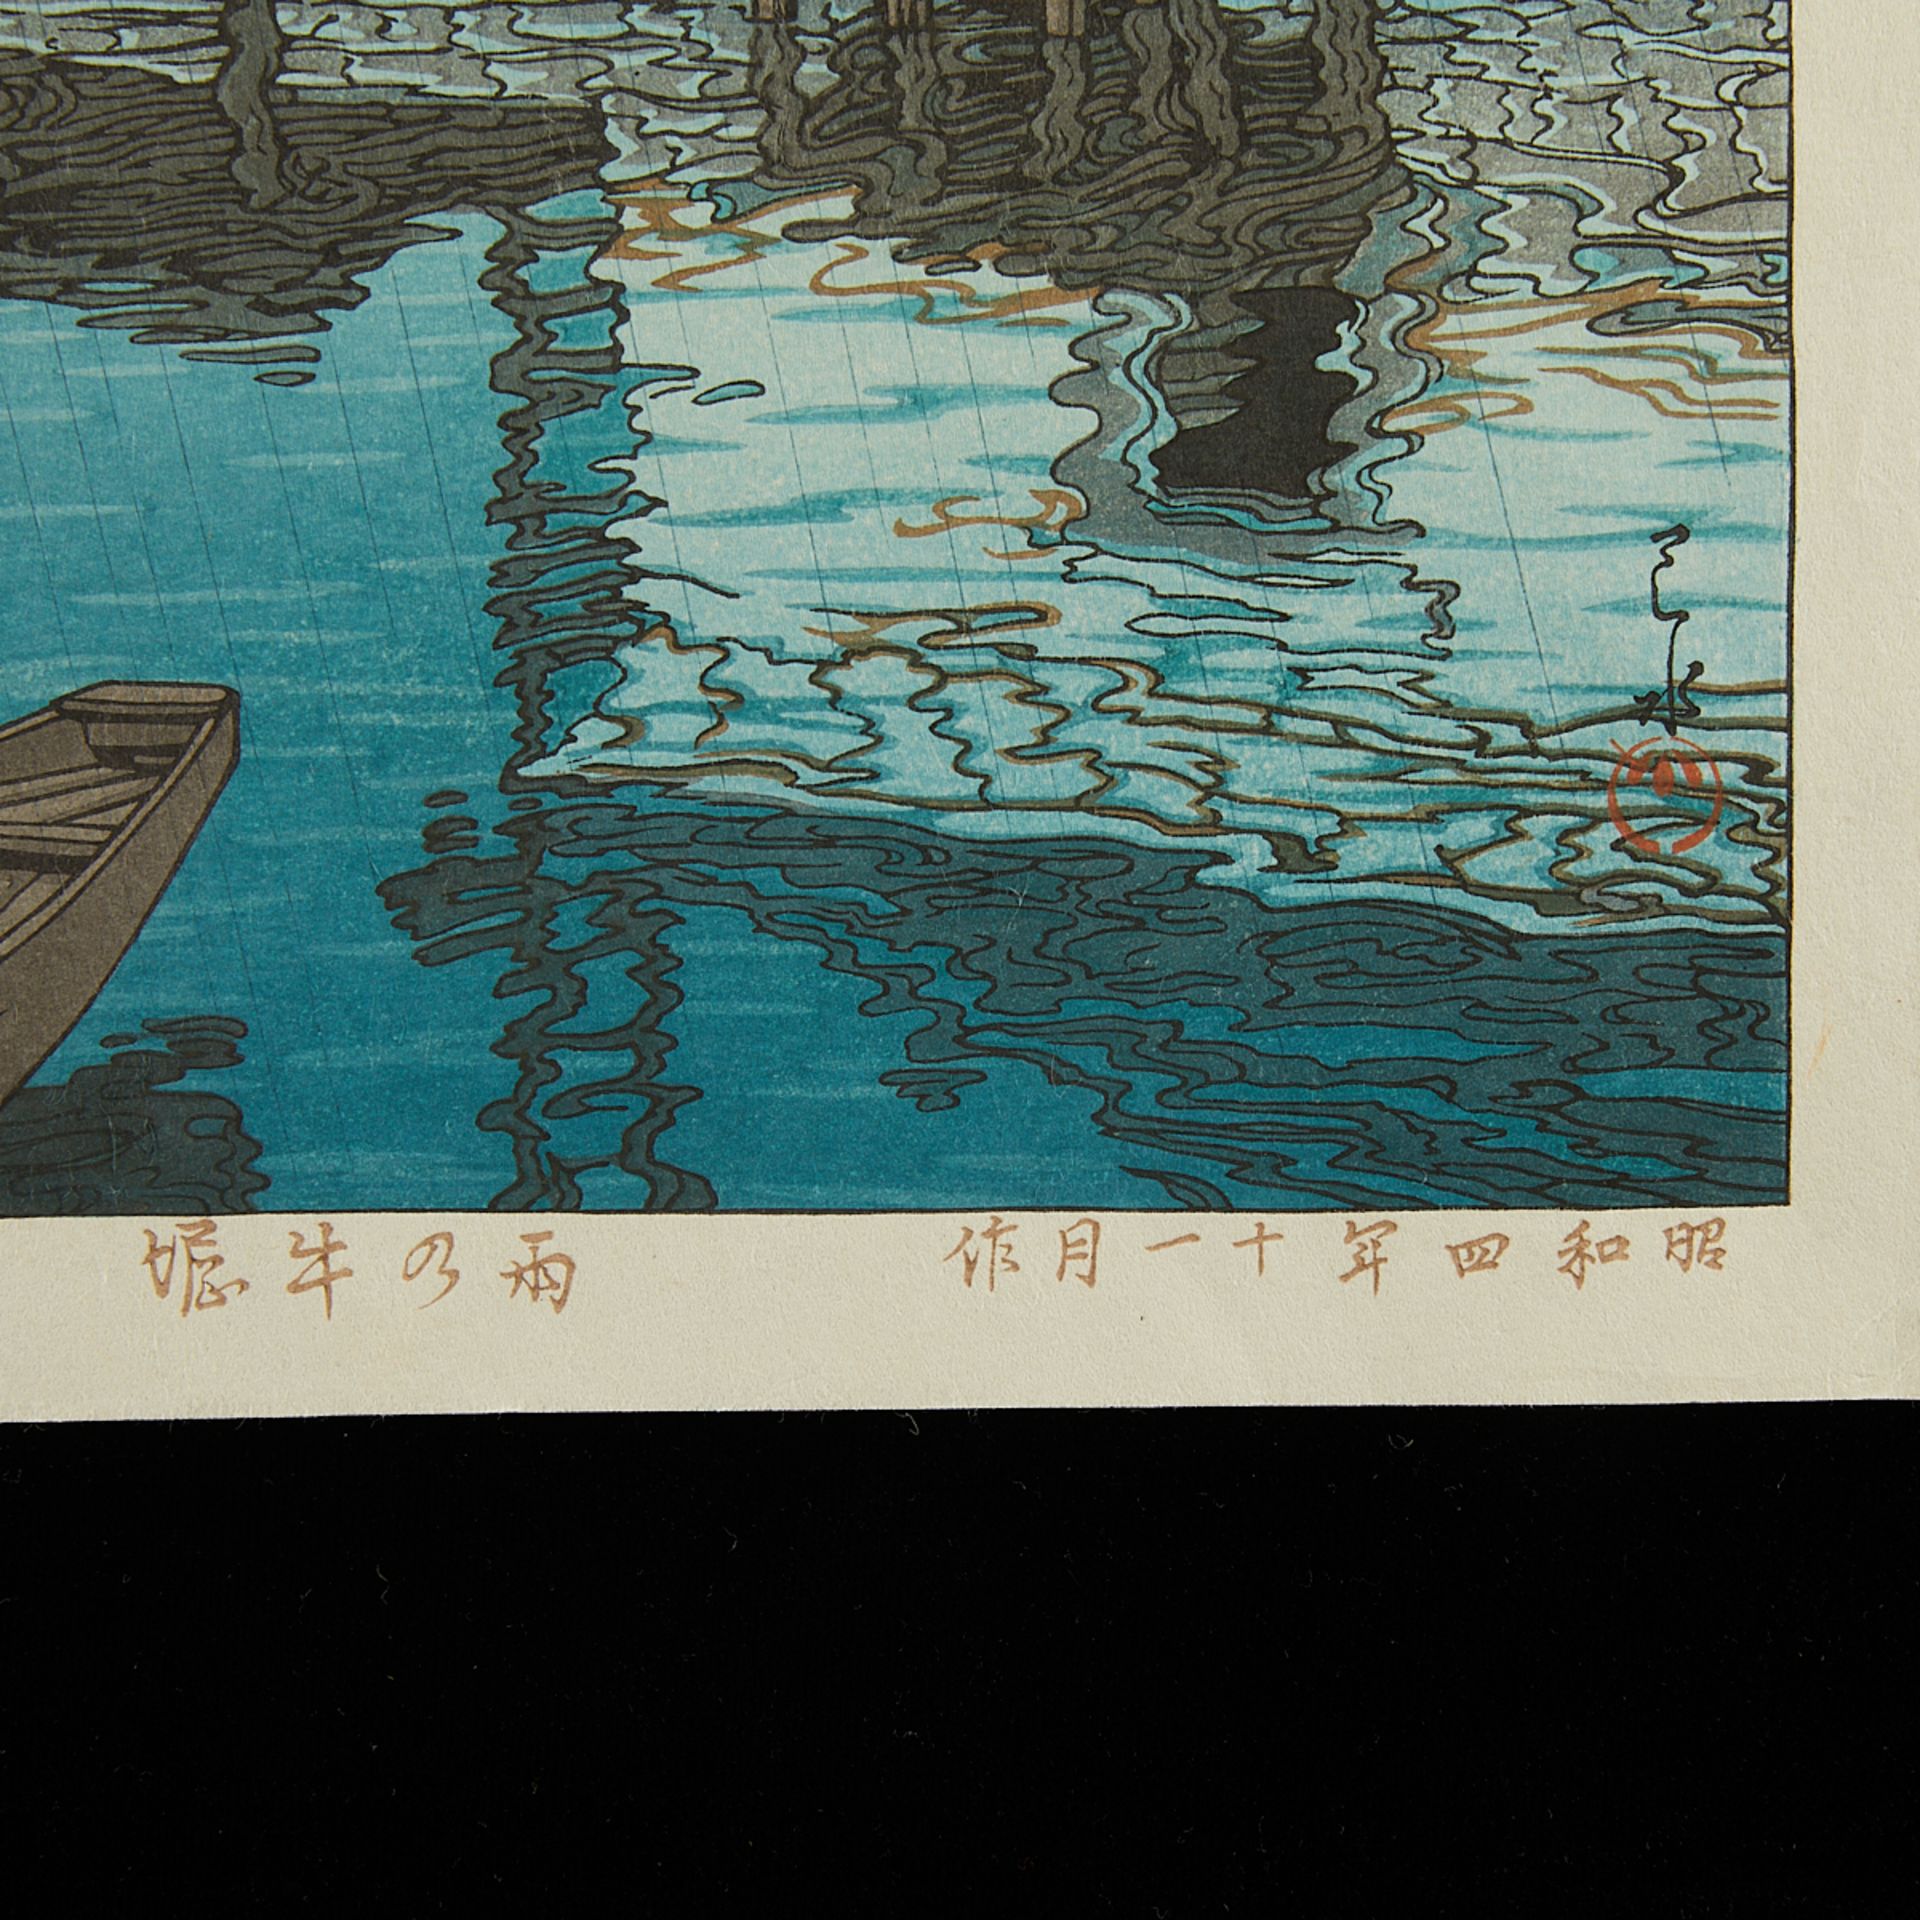 Hasui Kawase "Rain at Ushibori" Woodblock Print - Image 5 of 7